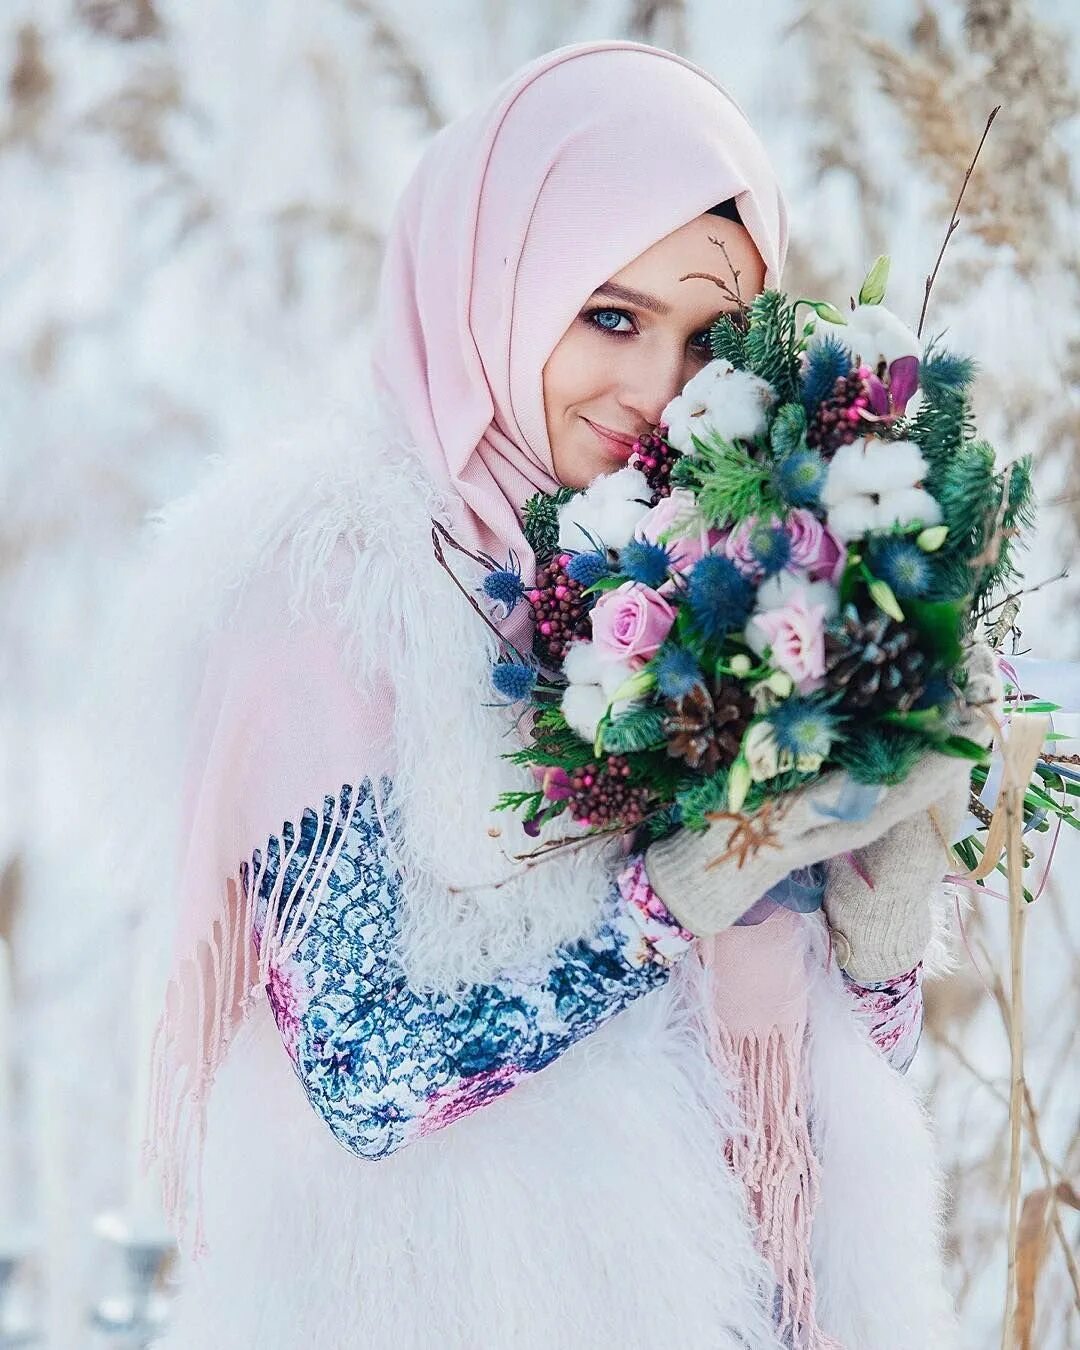 Мусульманские картинки хиджаб. Хиджаб платок Фирдаус турецкий. Чеченки Hadid hidjab.